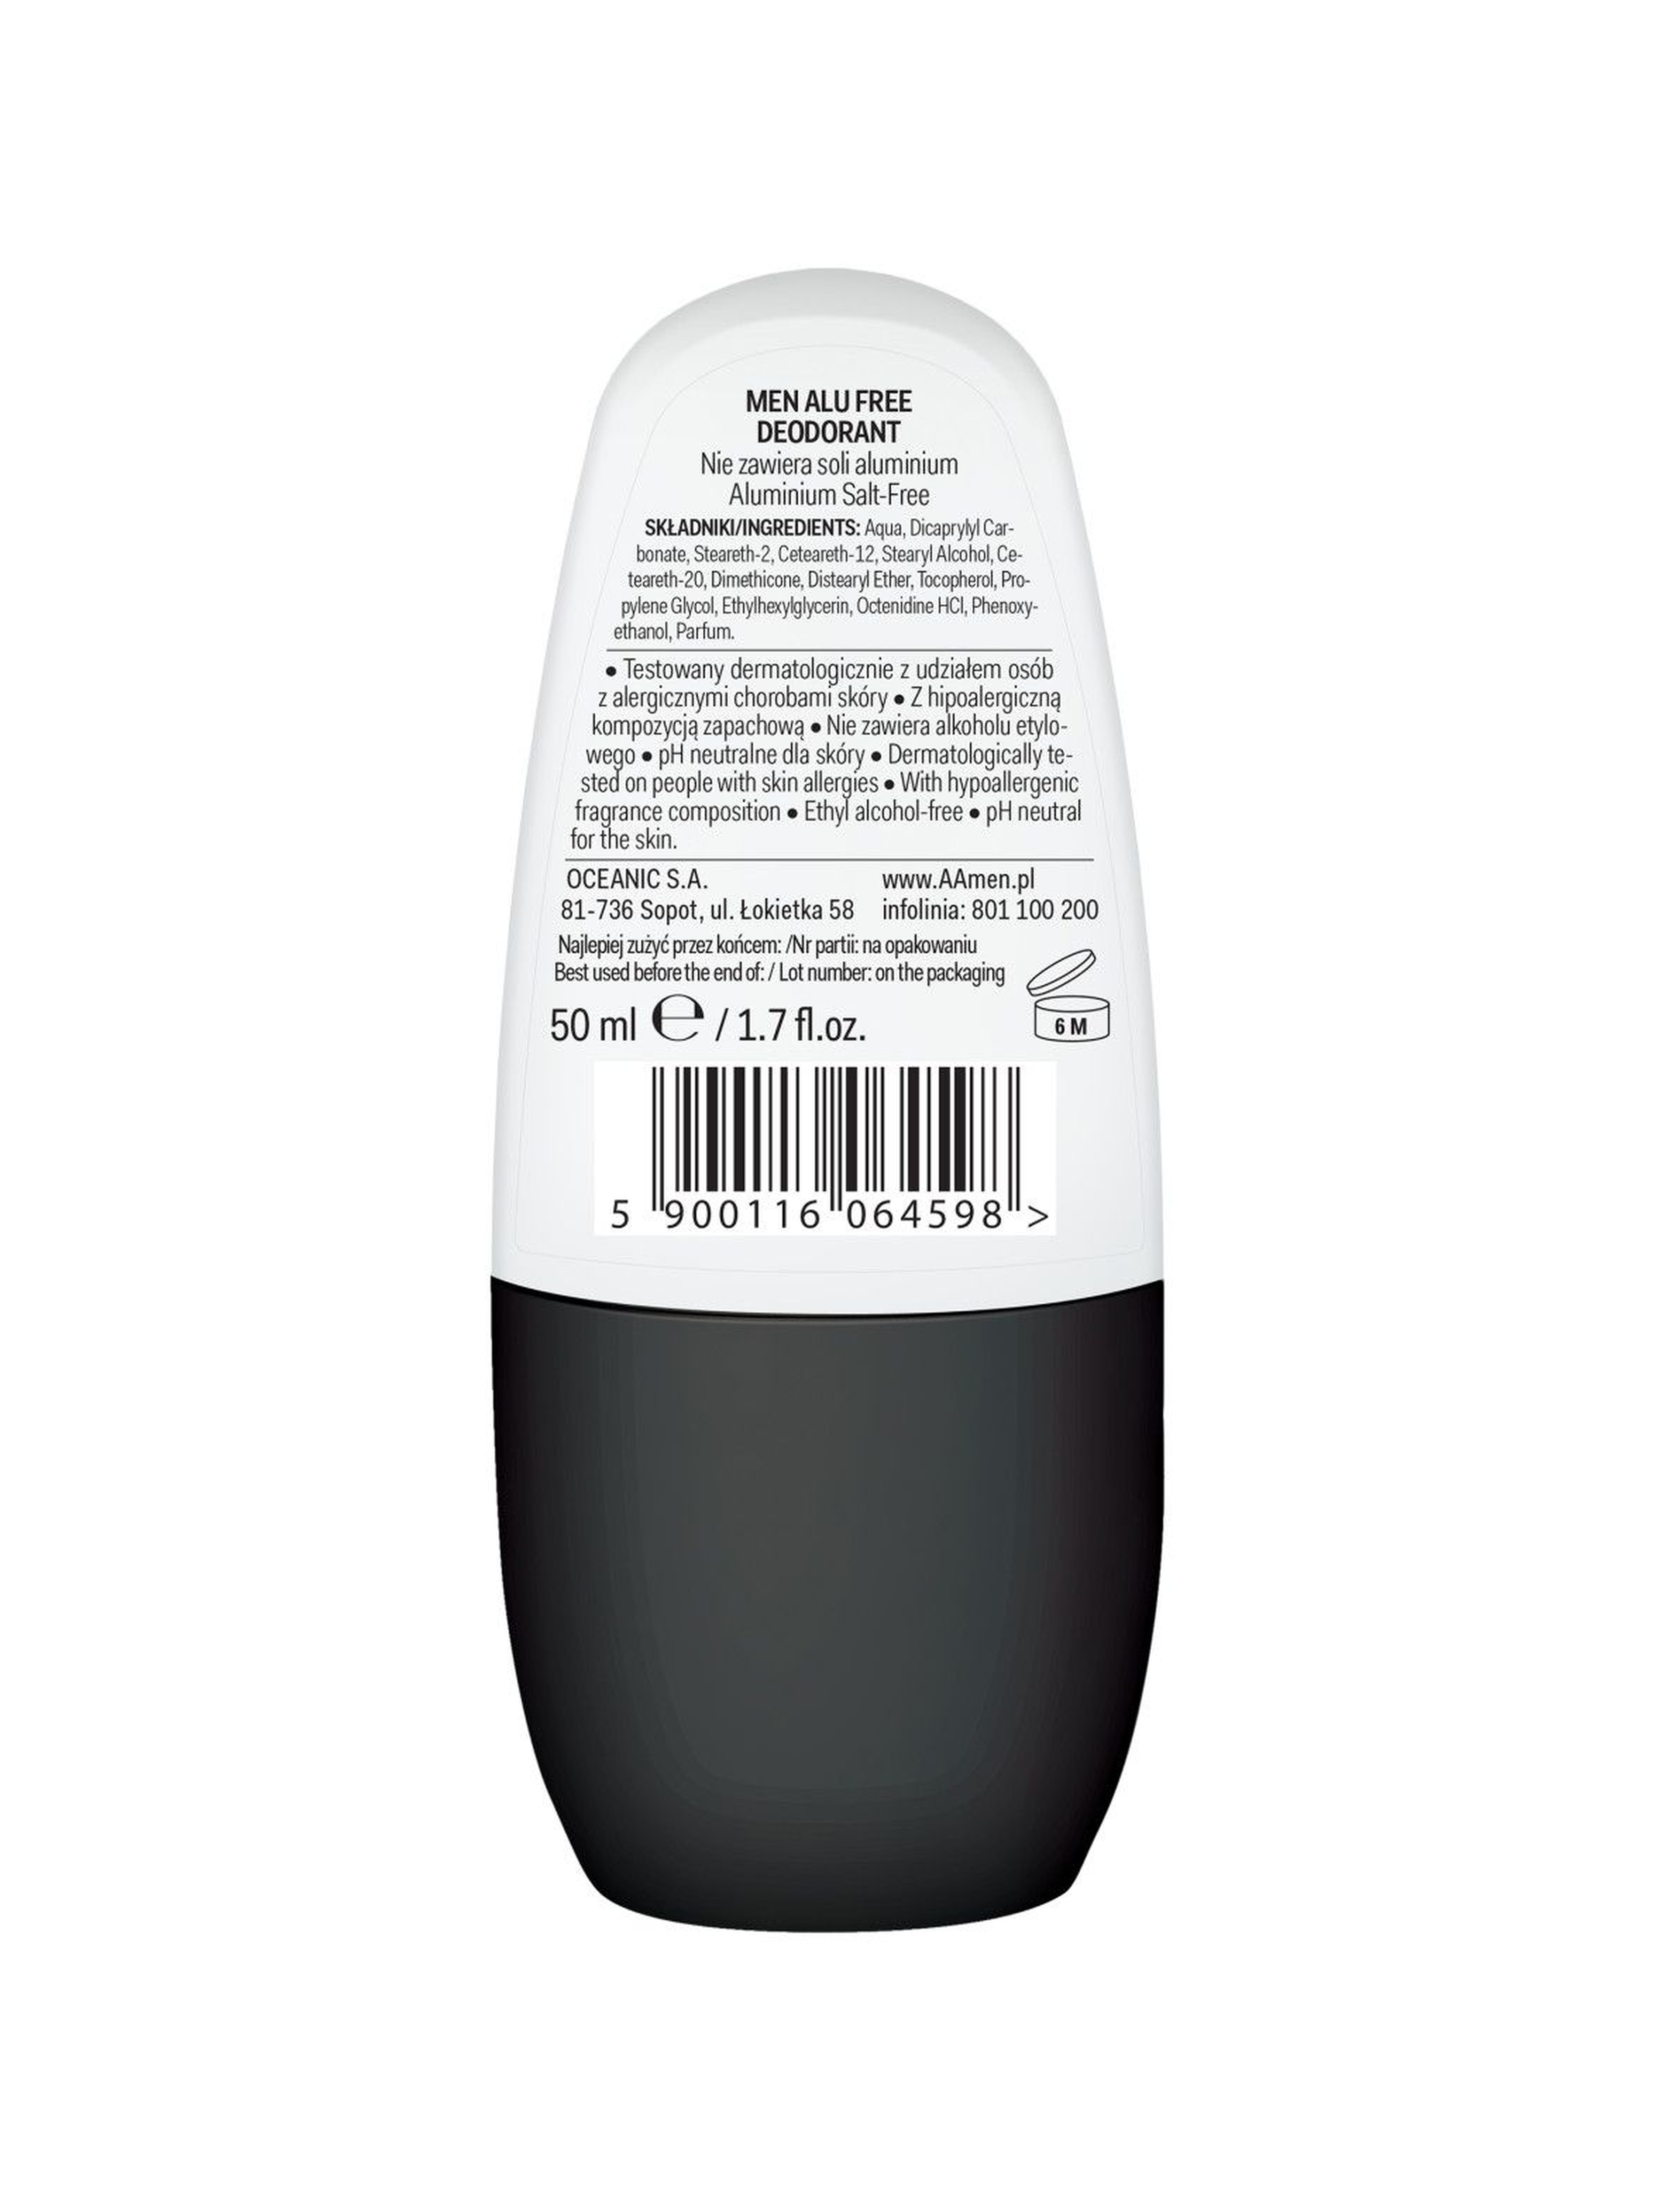 AA Men Alu Free deodorant mineral care 50 ml